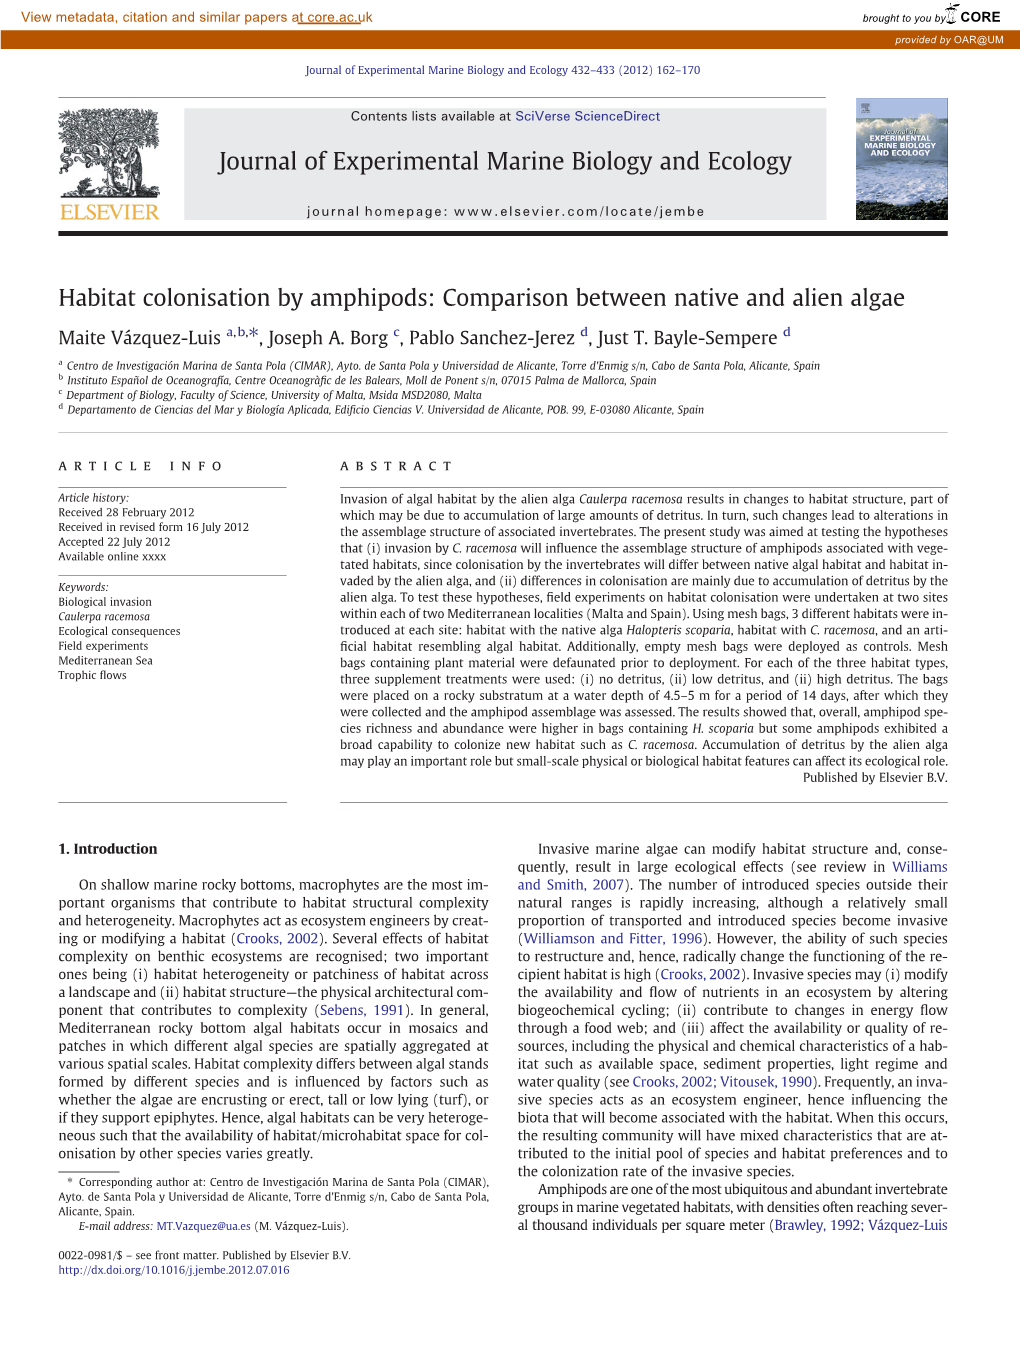 Habitat Colonisation by Amphipods: Comparison Between Native and Alien Algae